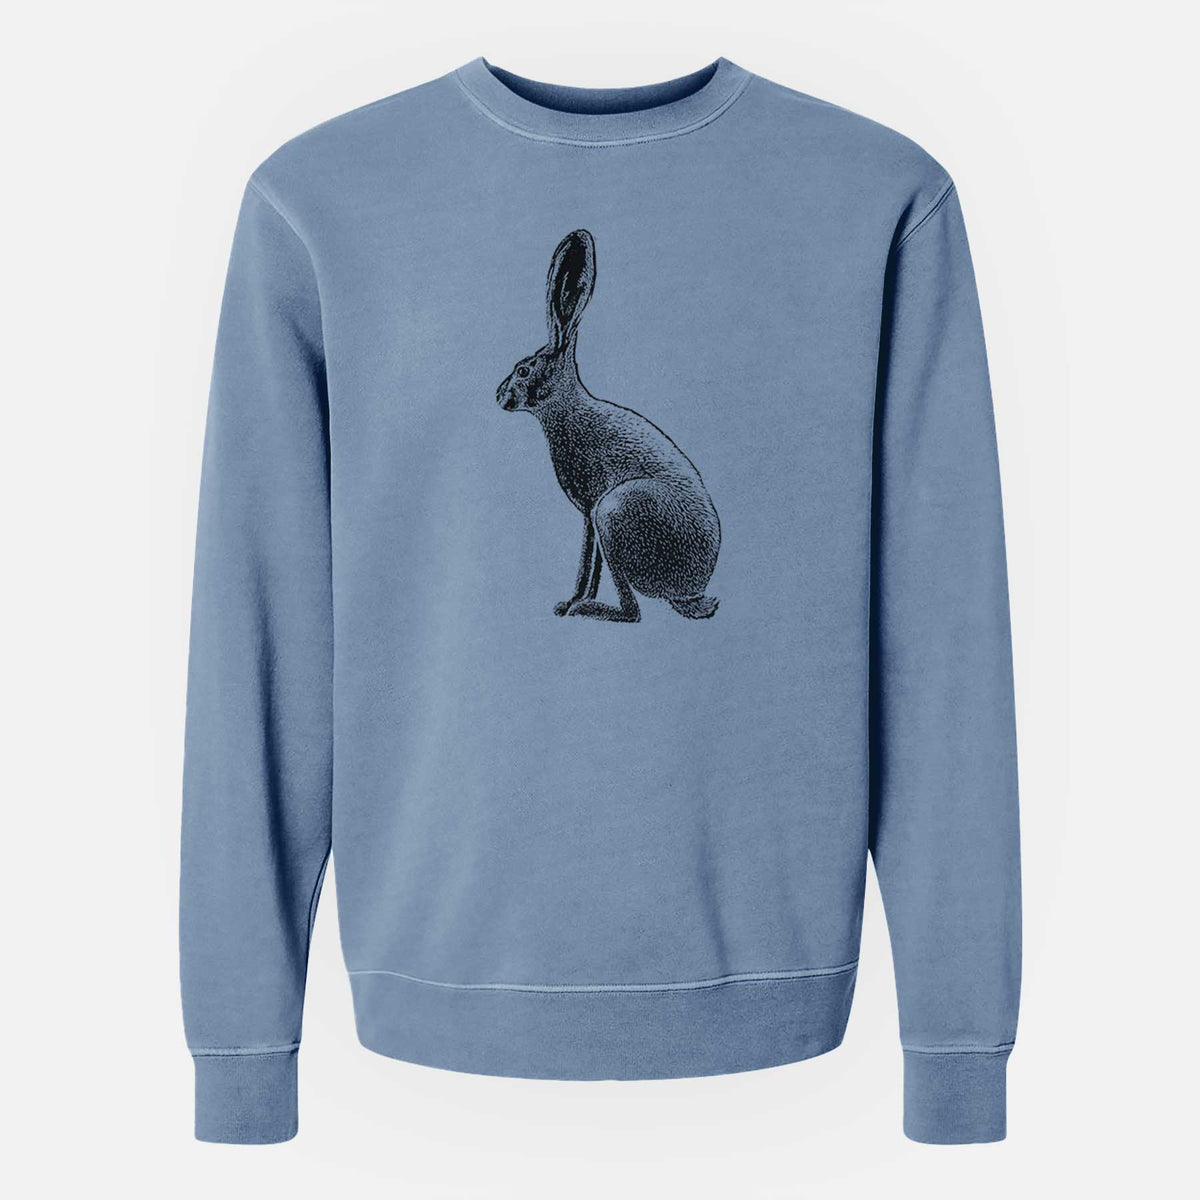 Wild California Hare - Black-tailed Jackrabbit - Unisex Pigment Dyed Crew Sweatshirt